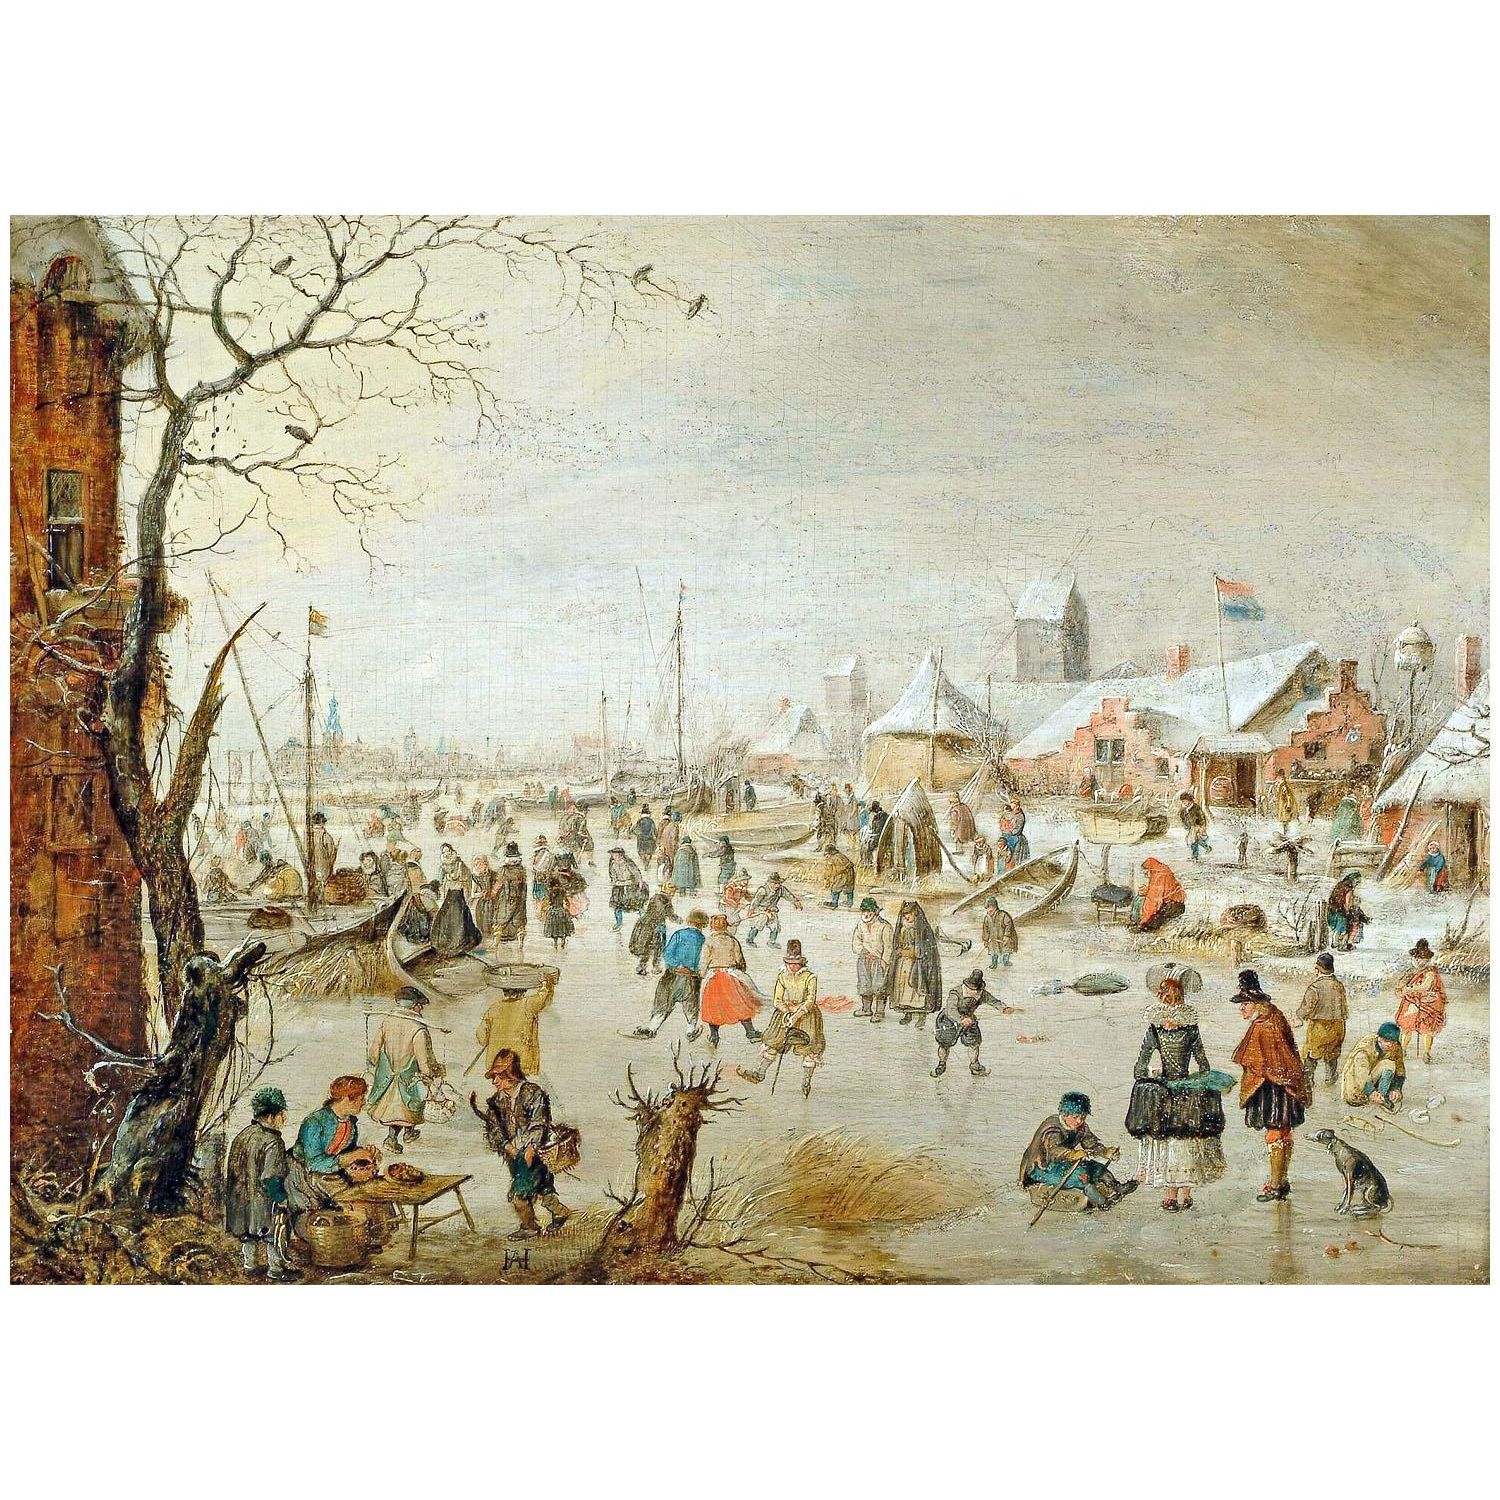 Hendrick Avercamp. A scene on the Ice. 1620. Museum Boijmans van Beuningen Rotterdam